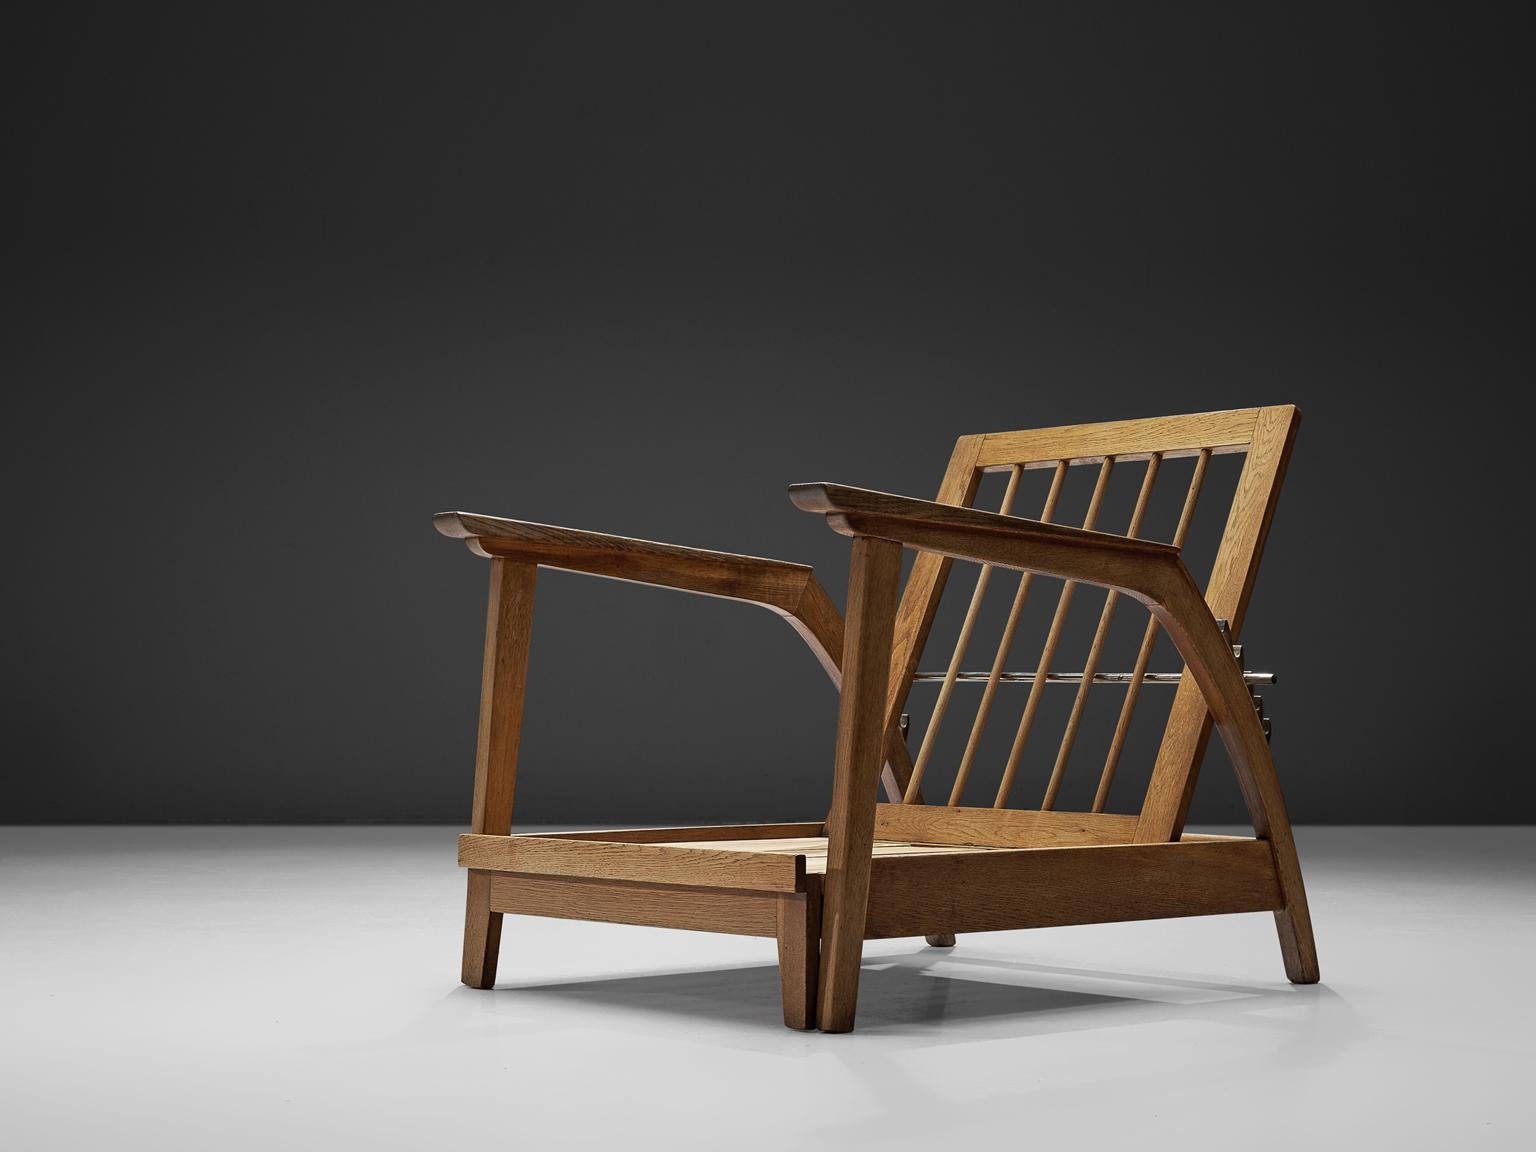 Scandinavian Modern Adjustable and Customizable Chaise Longue Made in Oak